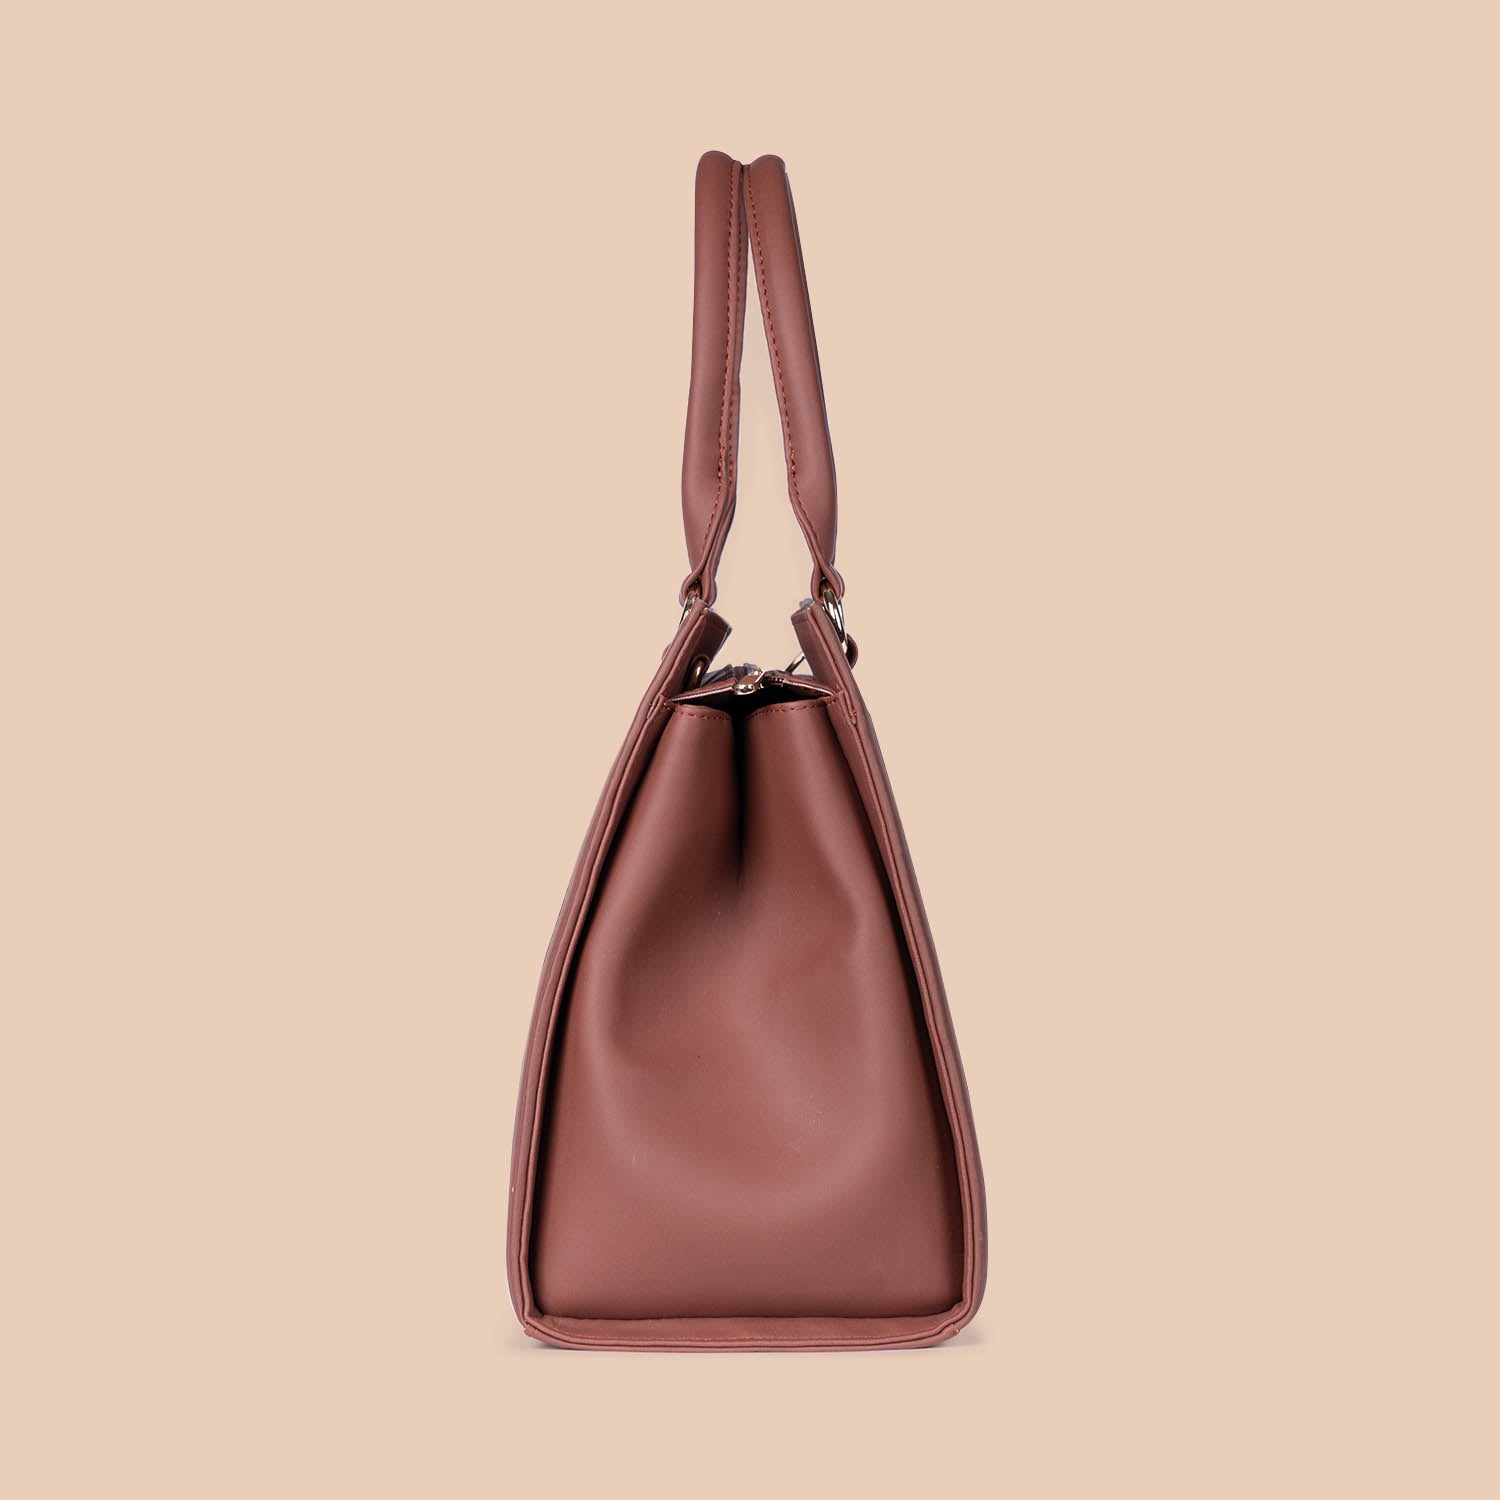 Nawabi Couture Classic Handbag